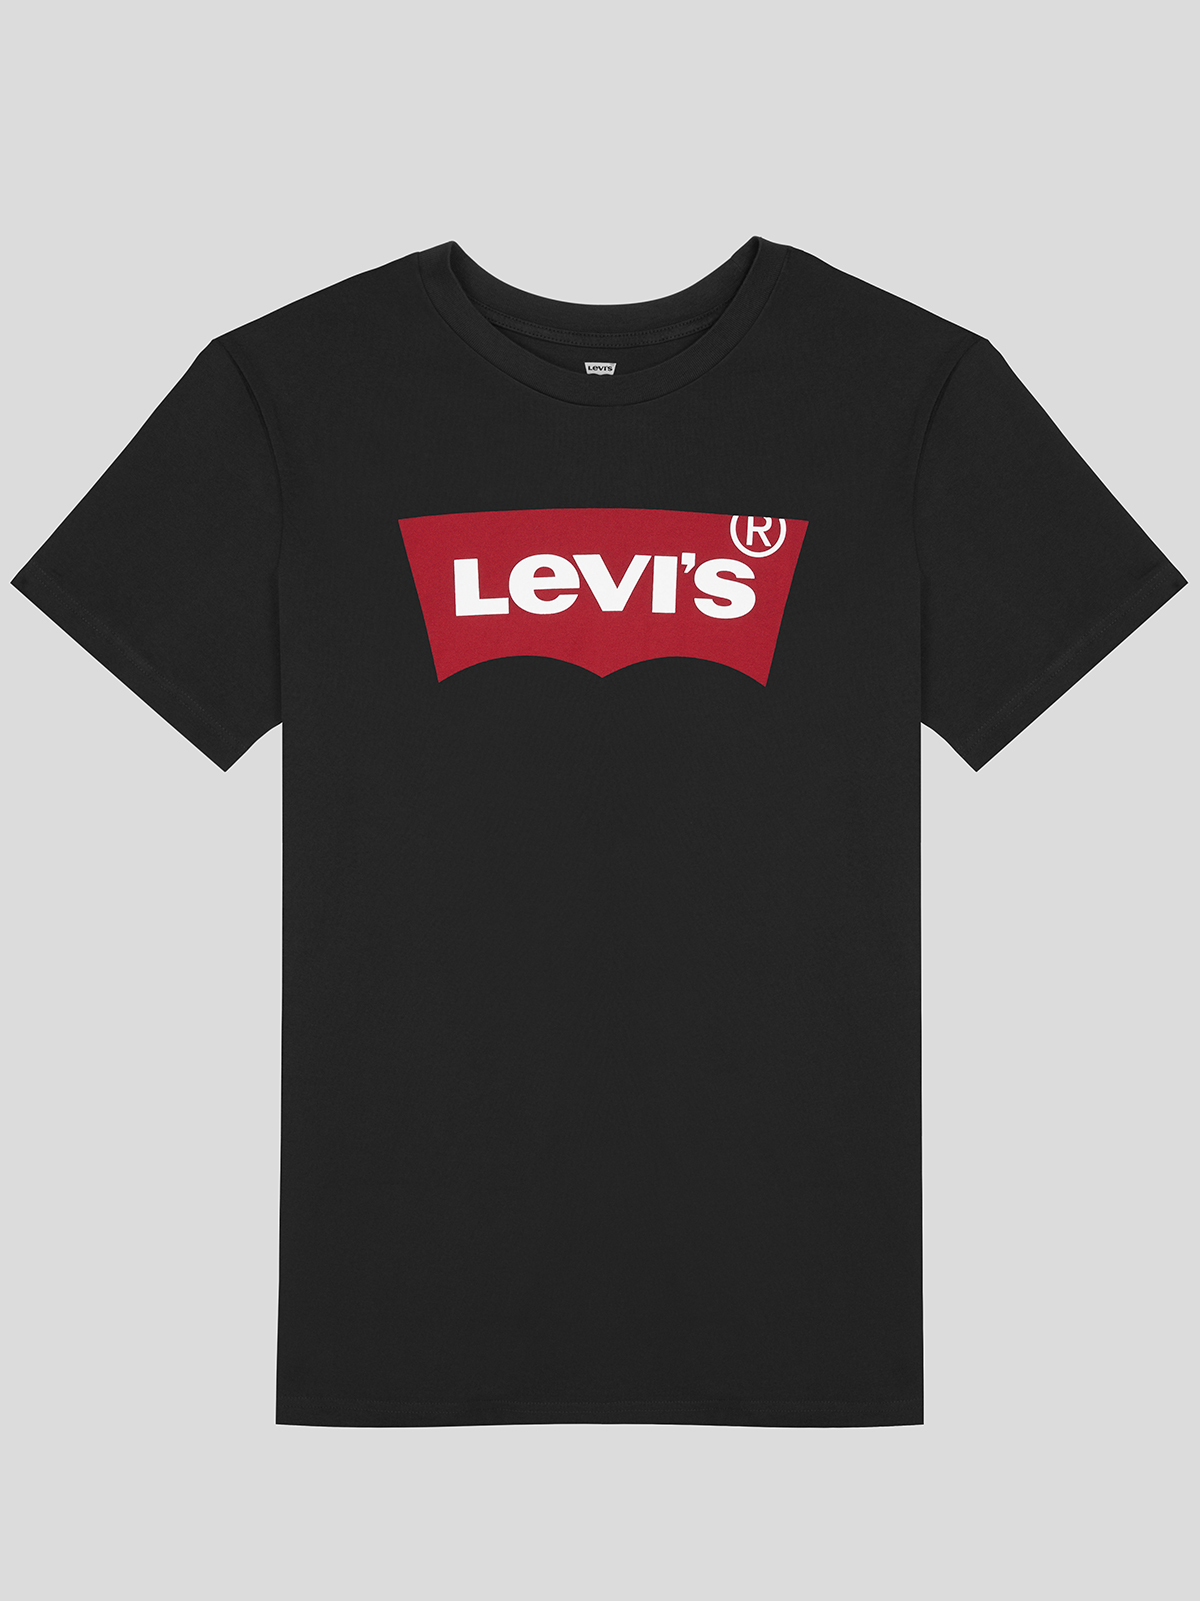 Tee-Shirt Levis Homme - Blanc/Noir –